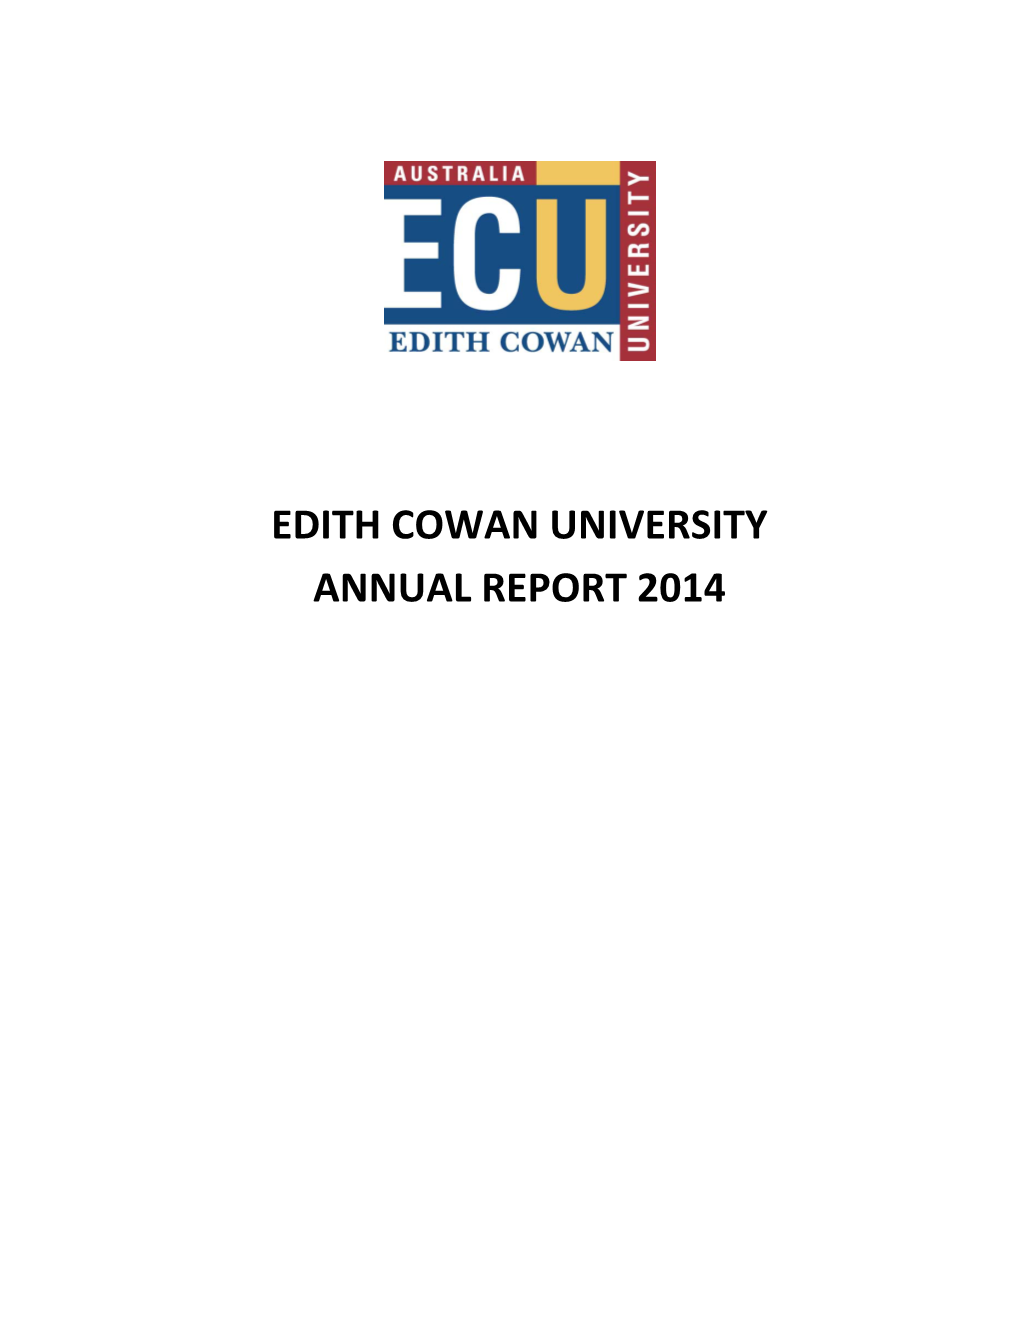 Edith Cowan University Annual Report 2014